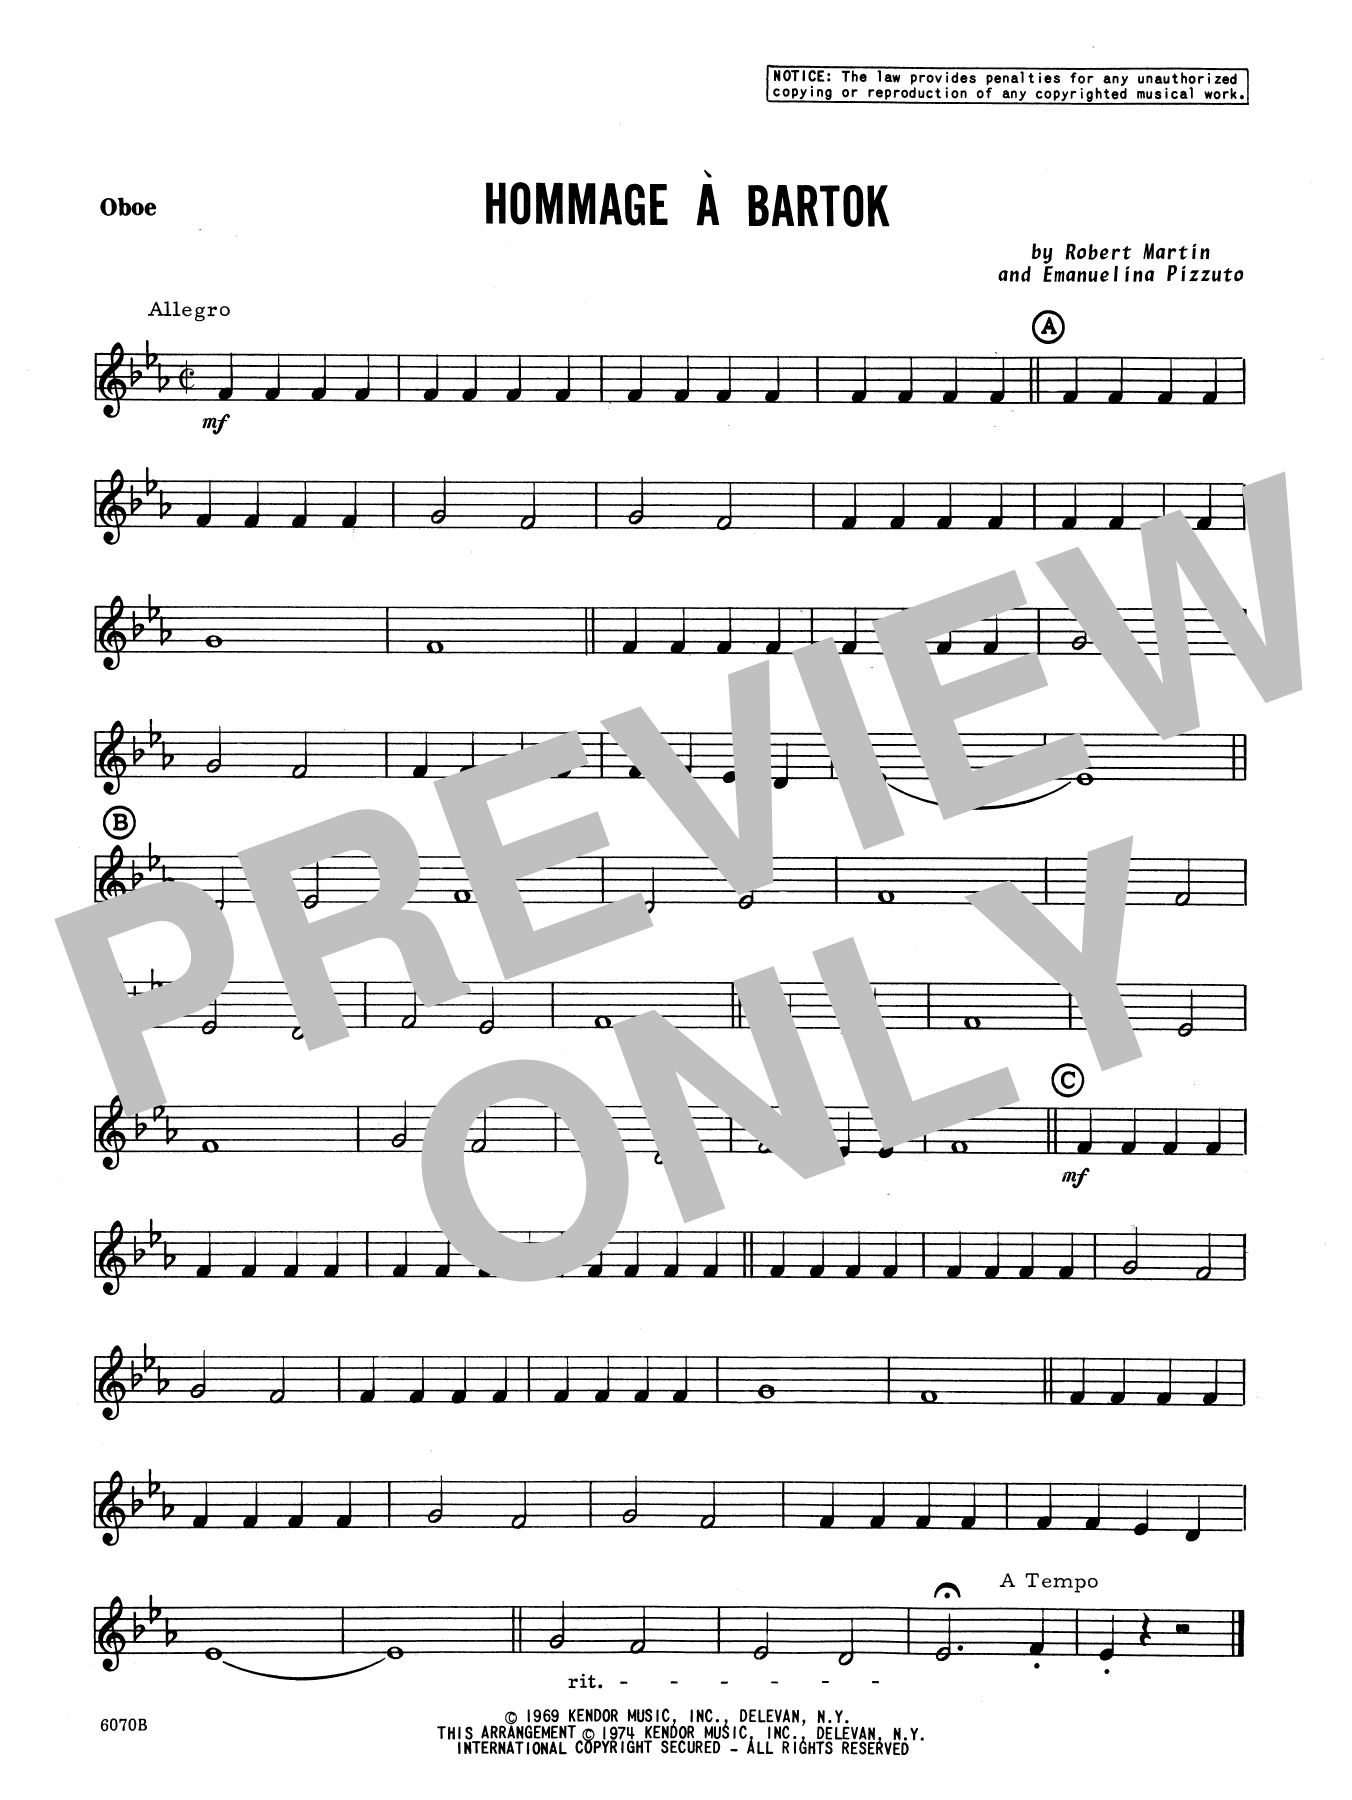 Download Martin Hommage A Bartok - Oboe Sheet Music